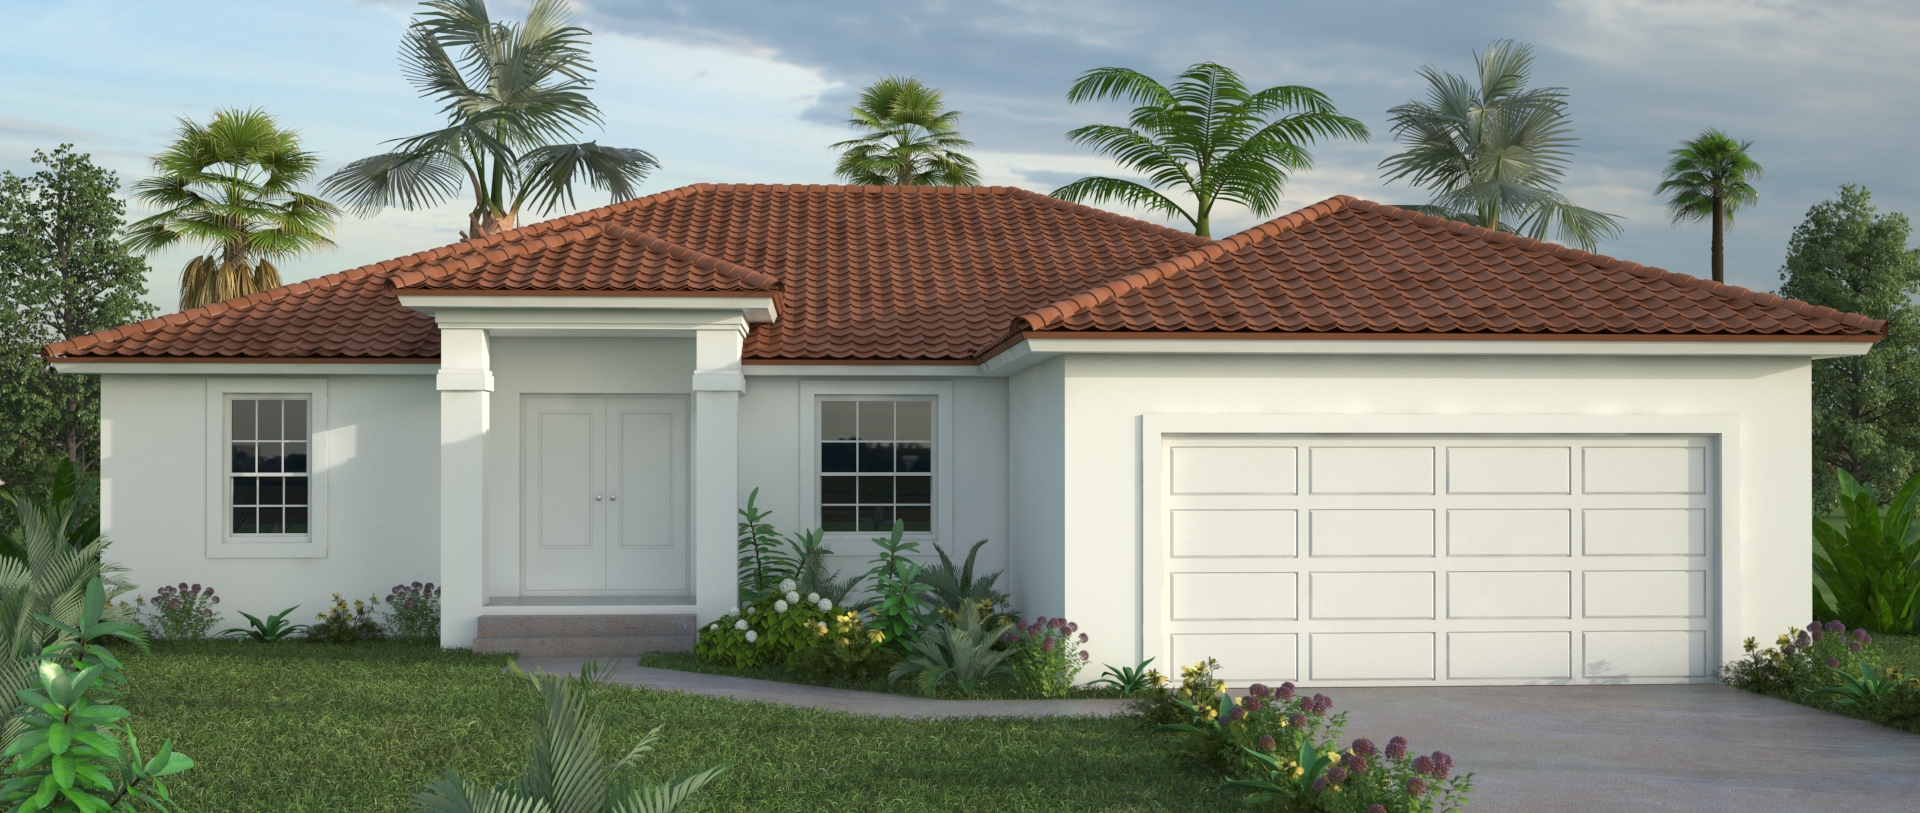 Avantgarde Design Home Builders Florida Pine Island Front View